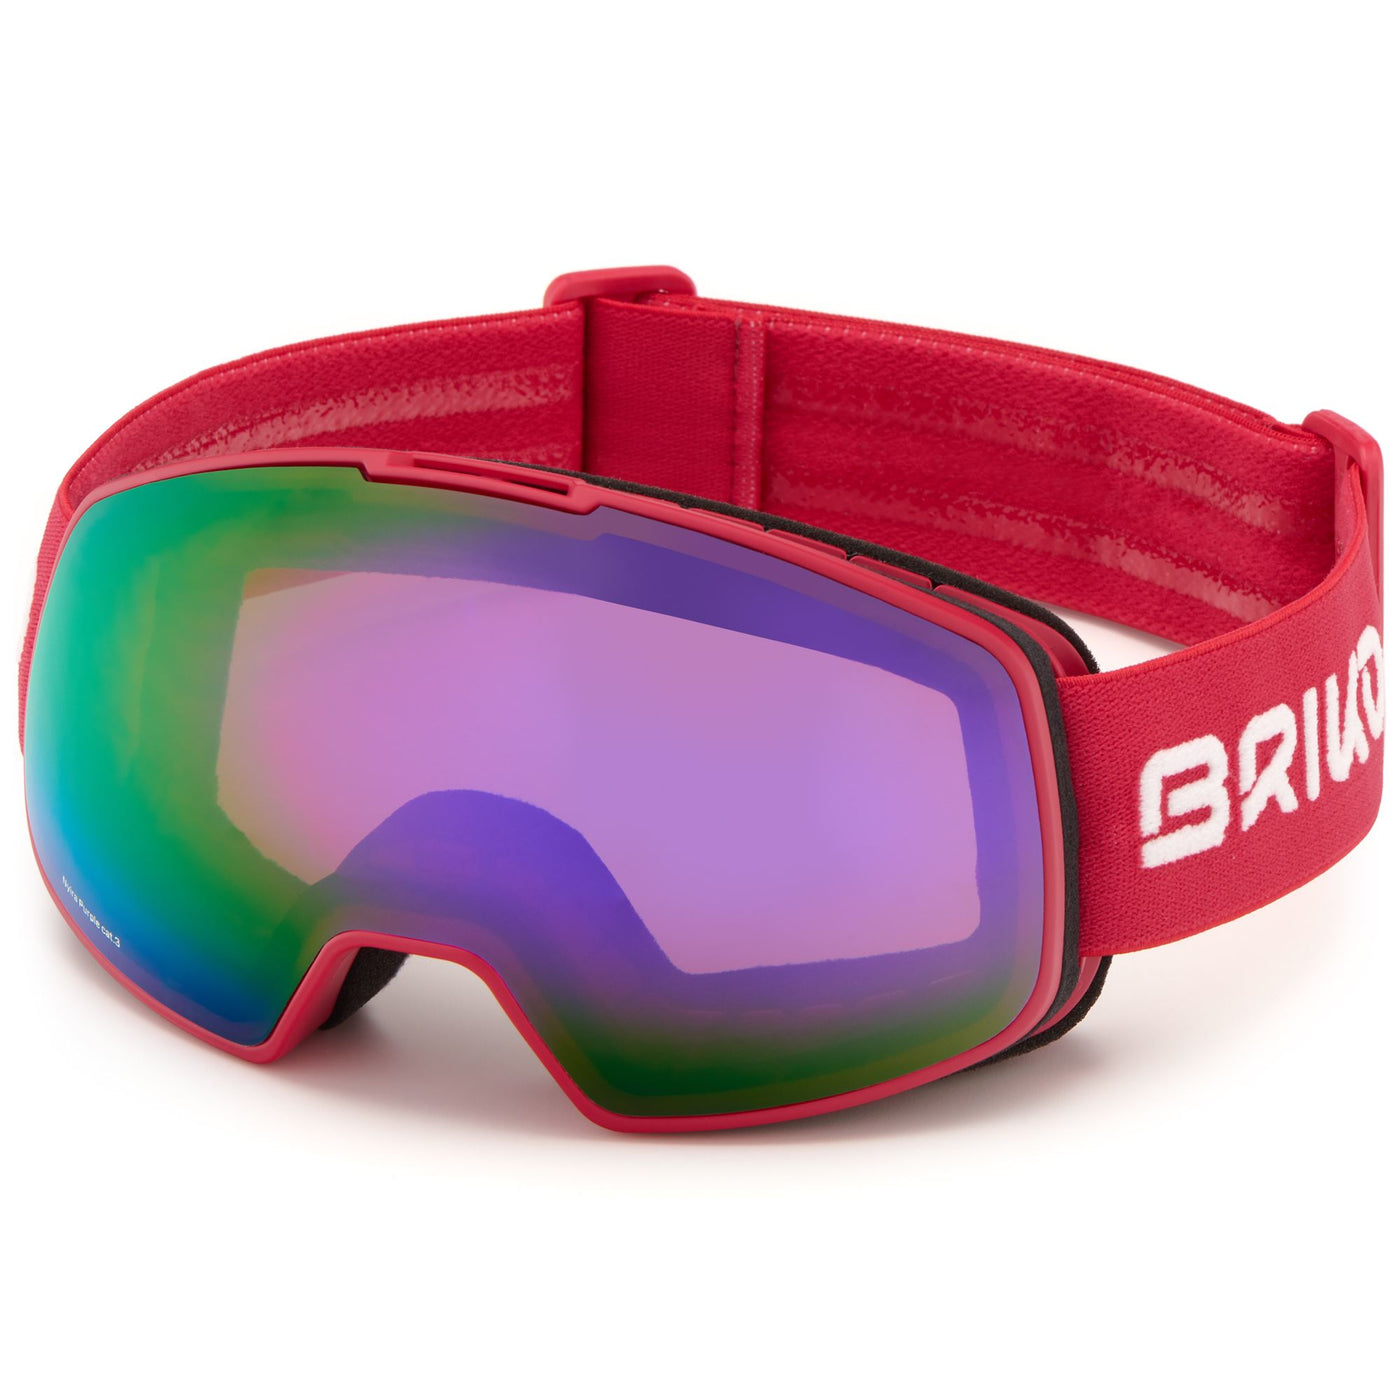 Goggles Unisex NYIRA Ski  Goggles RED RUBINE - PUM3 | briko Photo (jpg Rgb)			